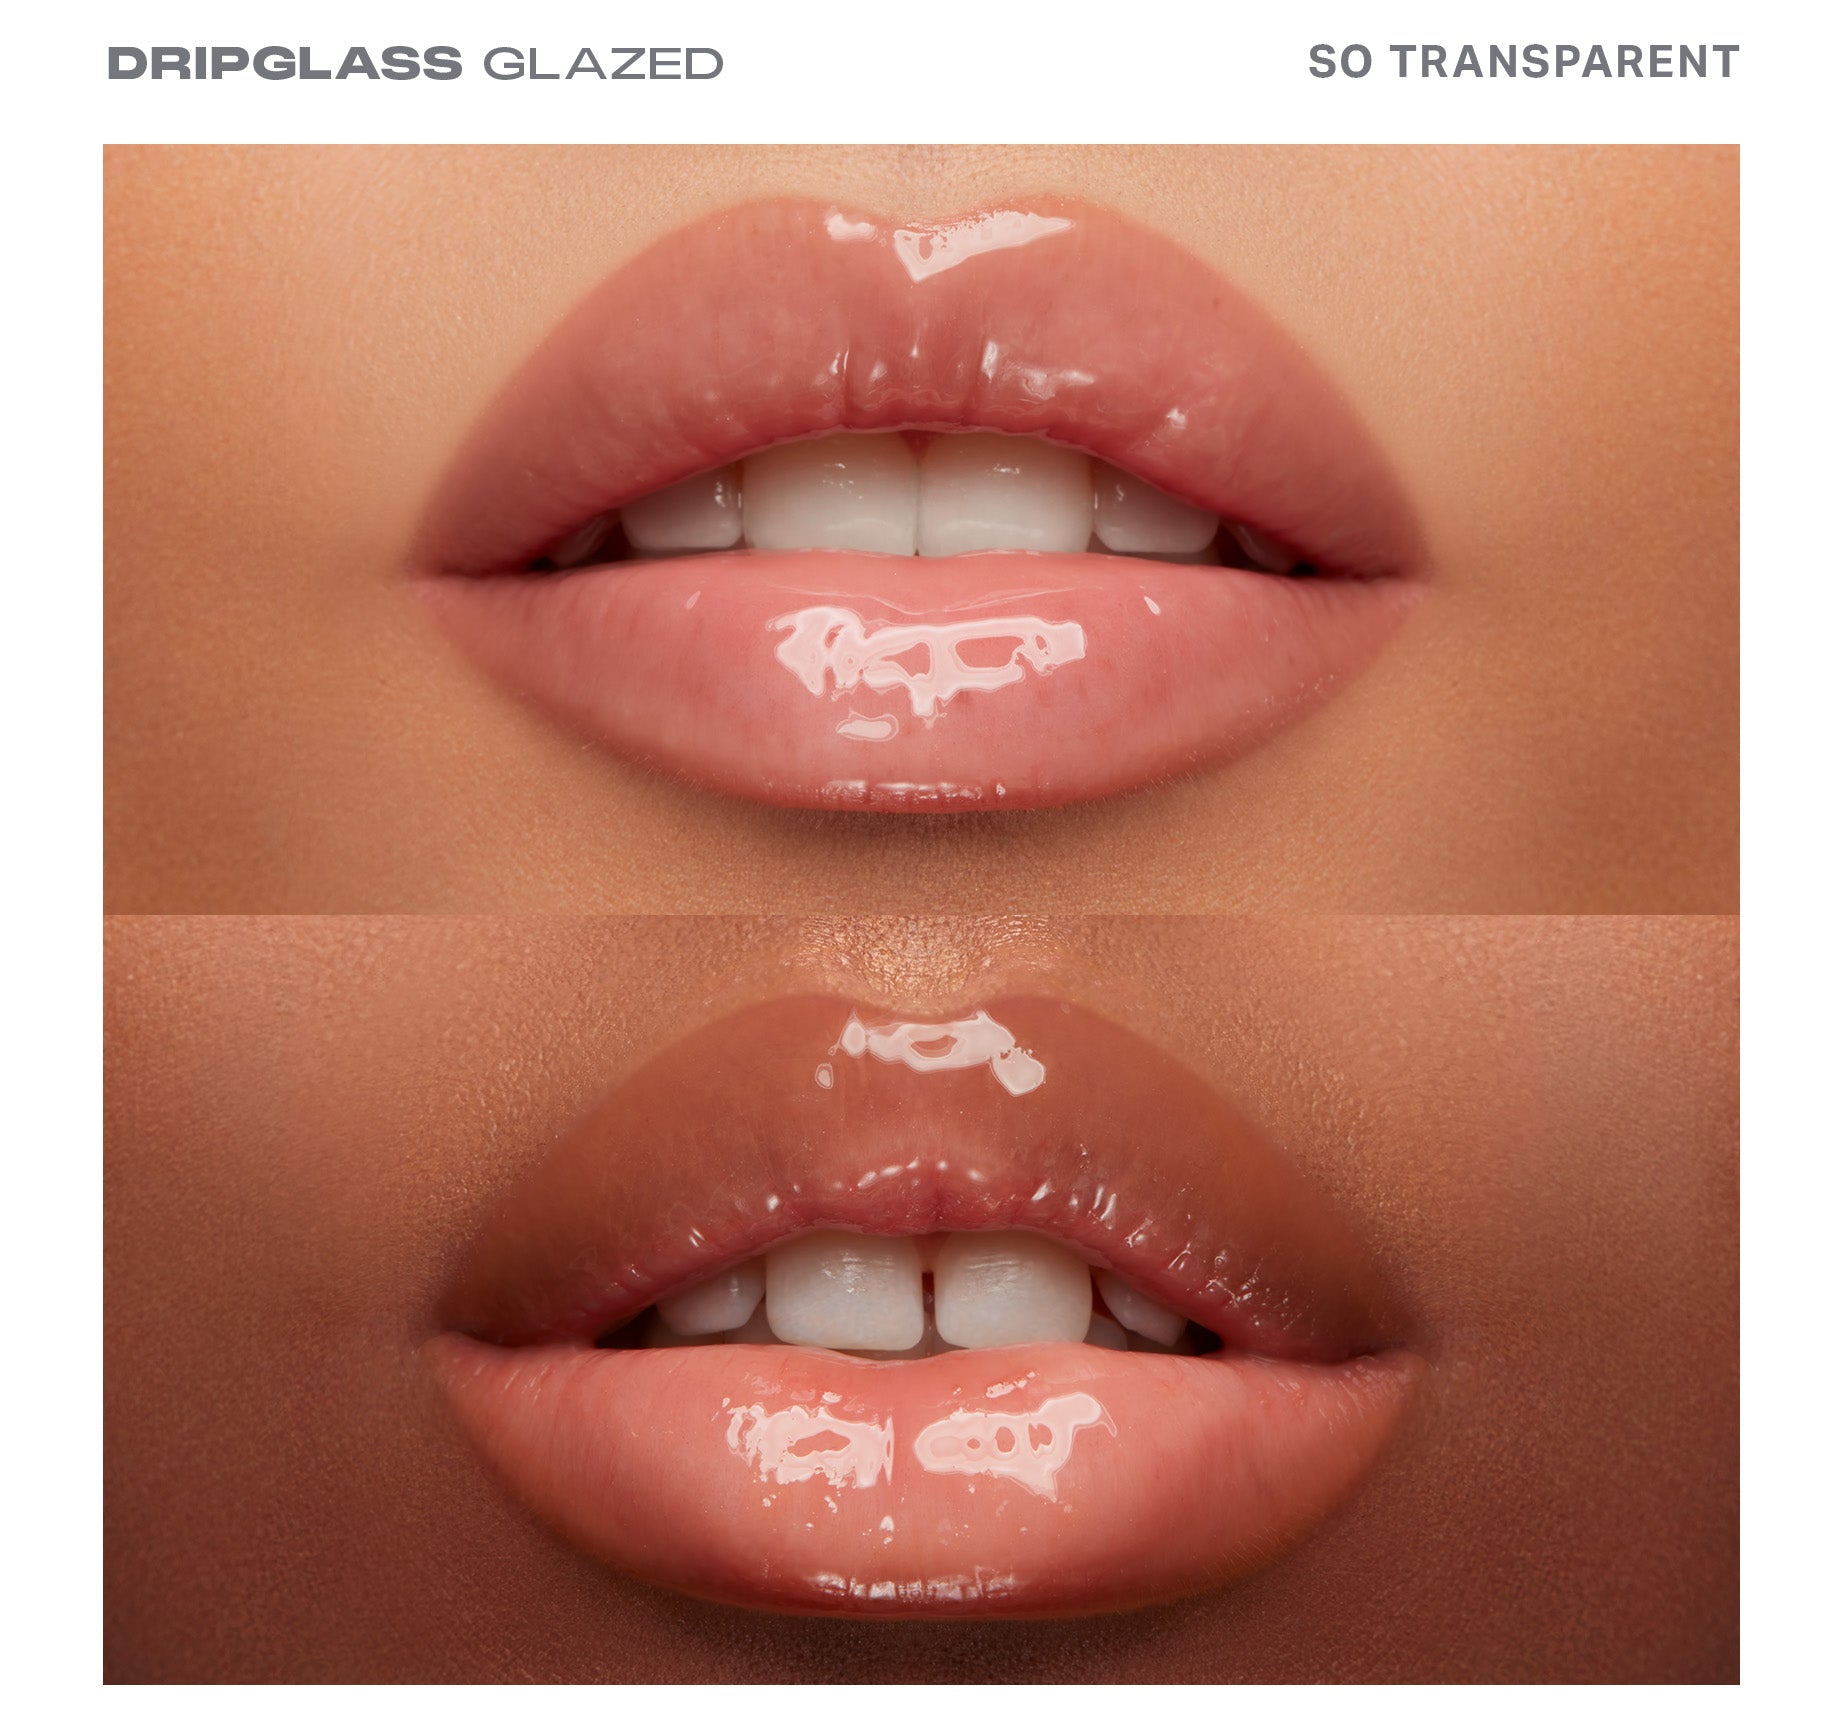 Dripglass Glazed High Shine Lip Gloss - So Transparent - Image 3